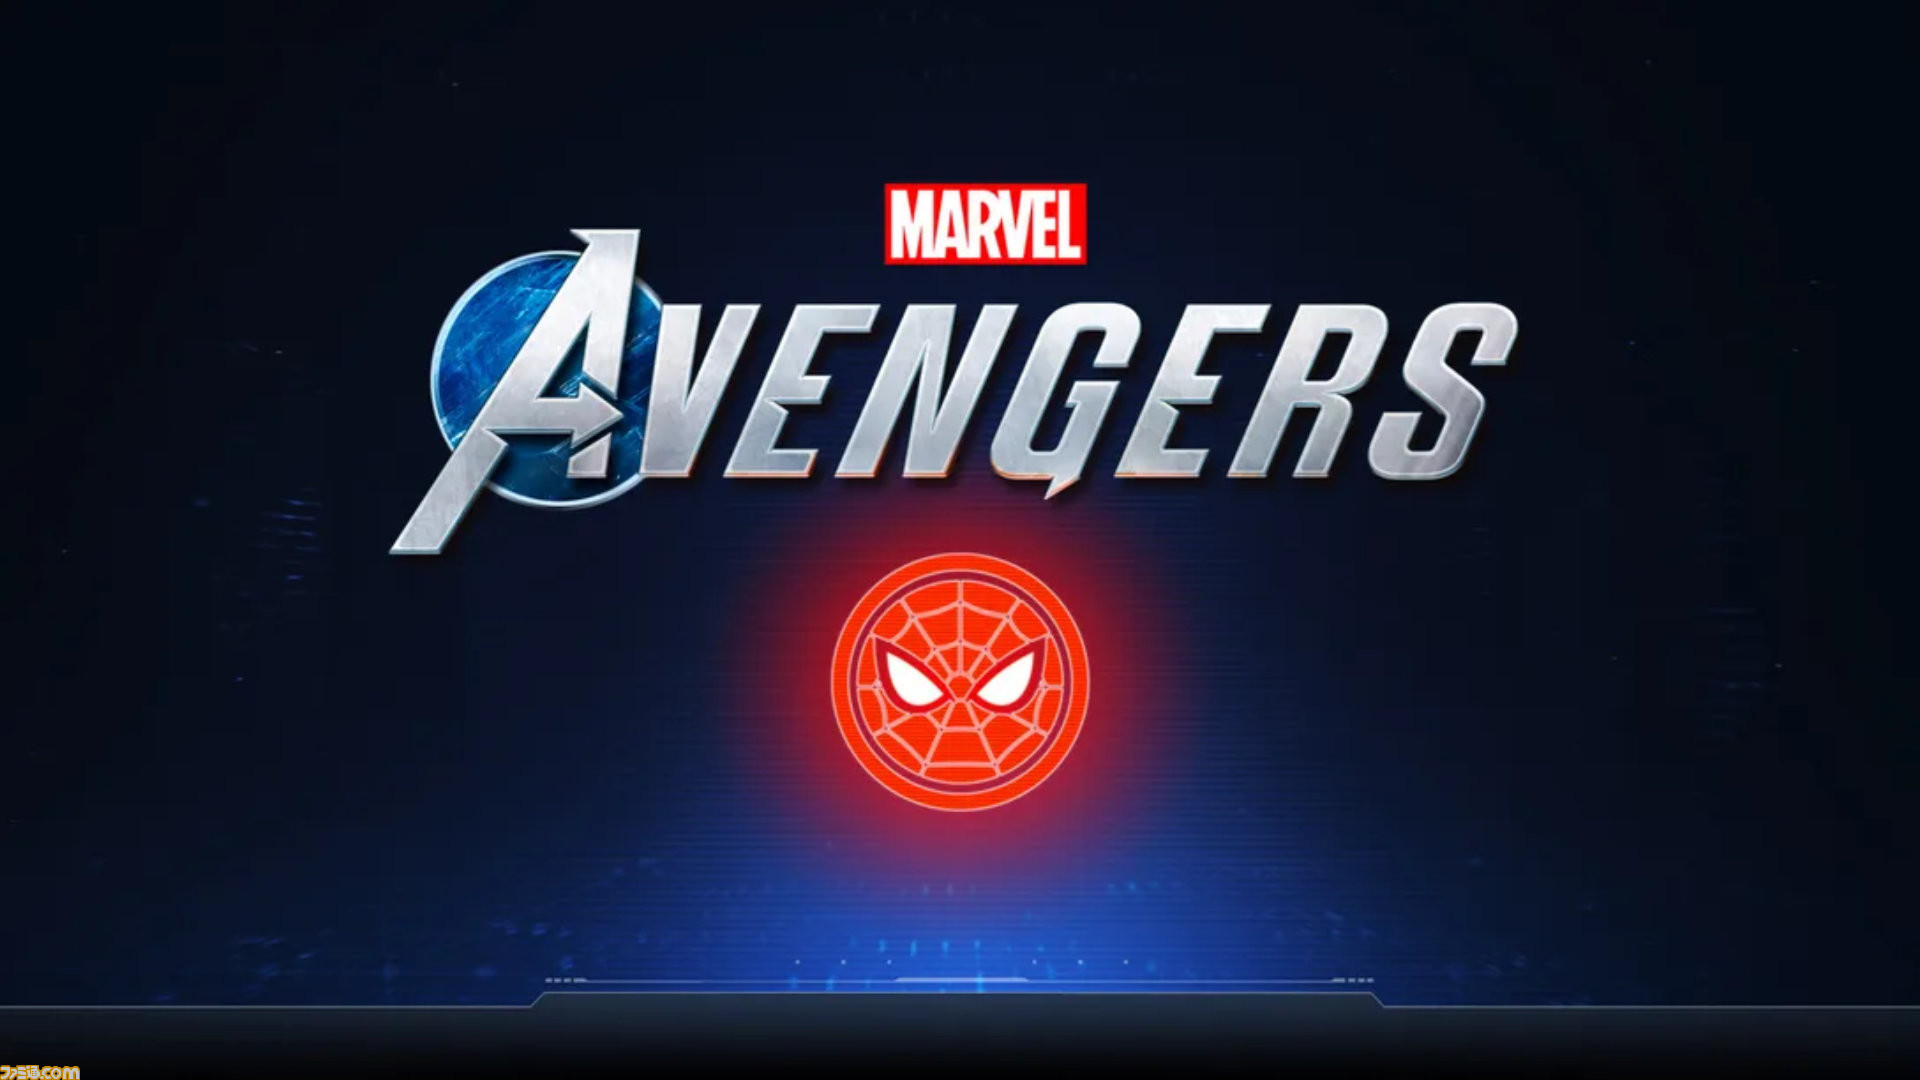 Marvel S Avengers アベンジャーズ スパイダーマンがプレイステーション4 5版独占で参戦決定 21年に無料アップデートで追加予定 ファミ通 Com